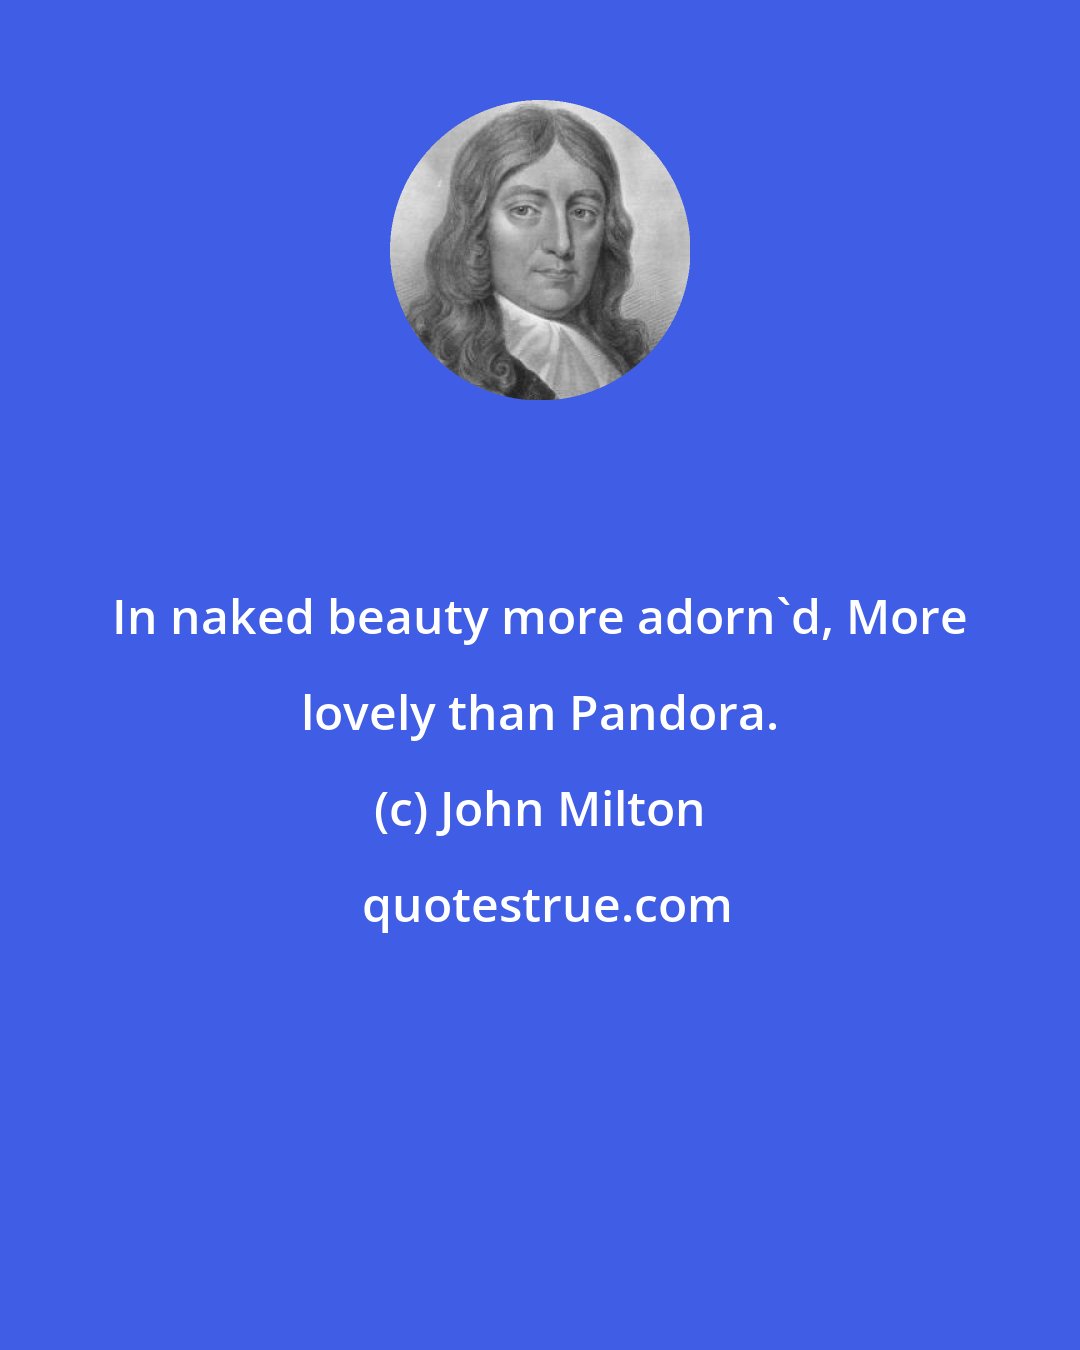 John Milton: In naked beauty more adorn'd, More lovely than Pandora.